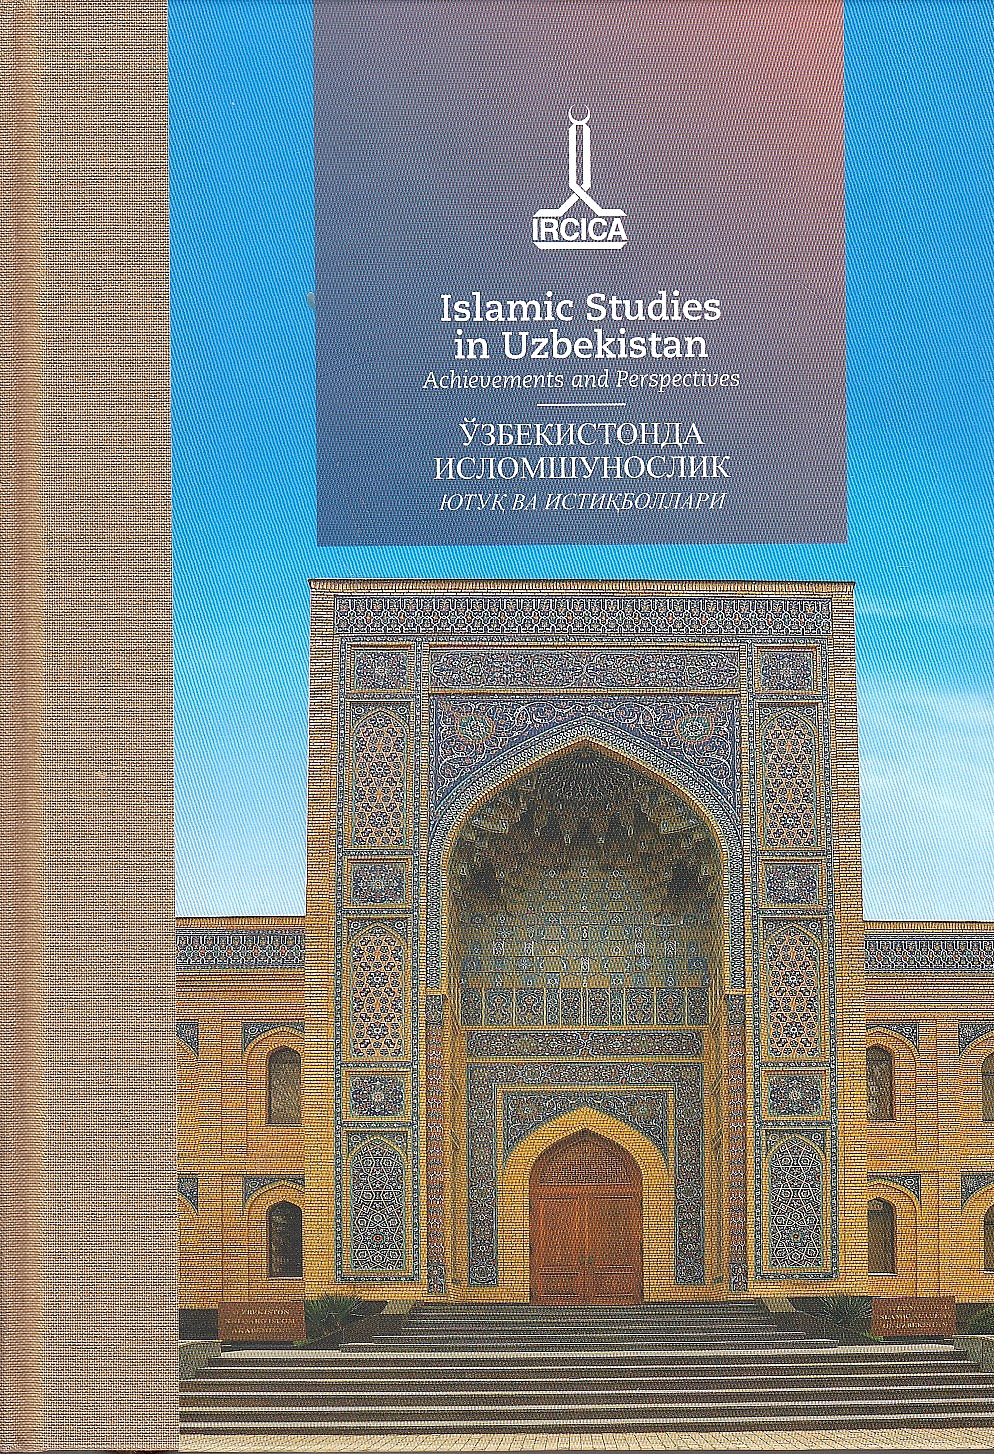 Proceedings of the International Workshop on Islamic Studies in Uzbekistan, achivements and perspectives, June 2019, Tashkent